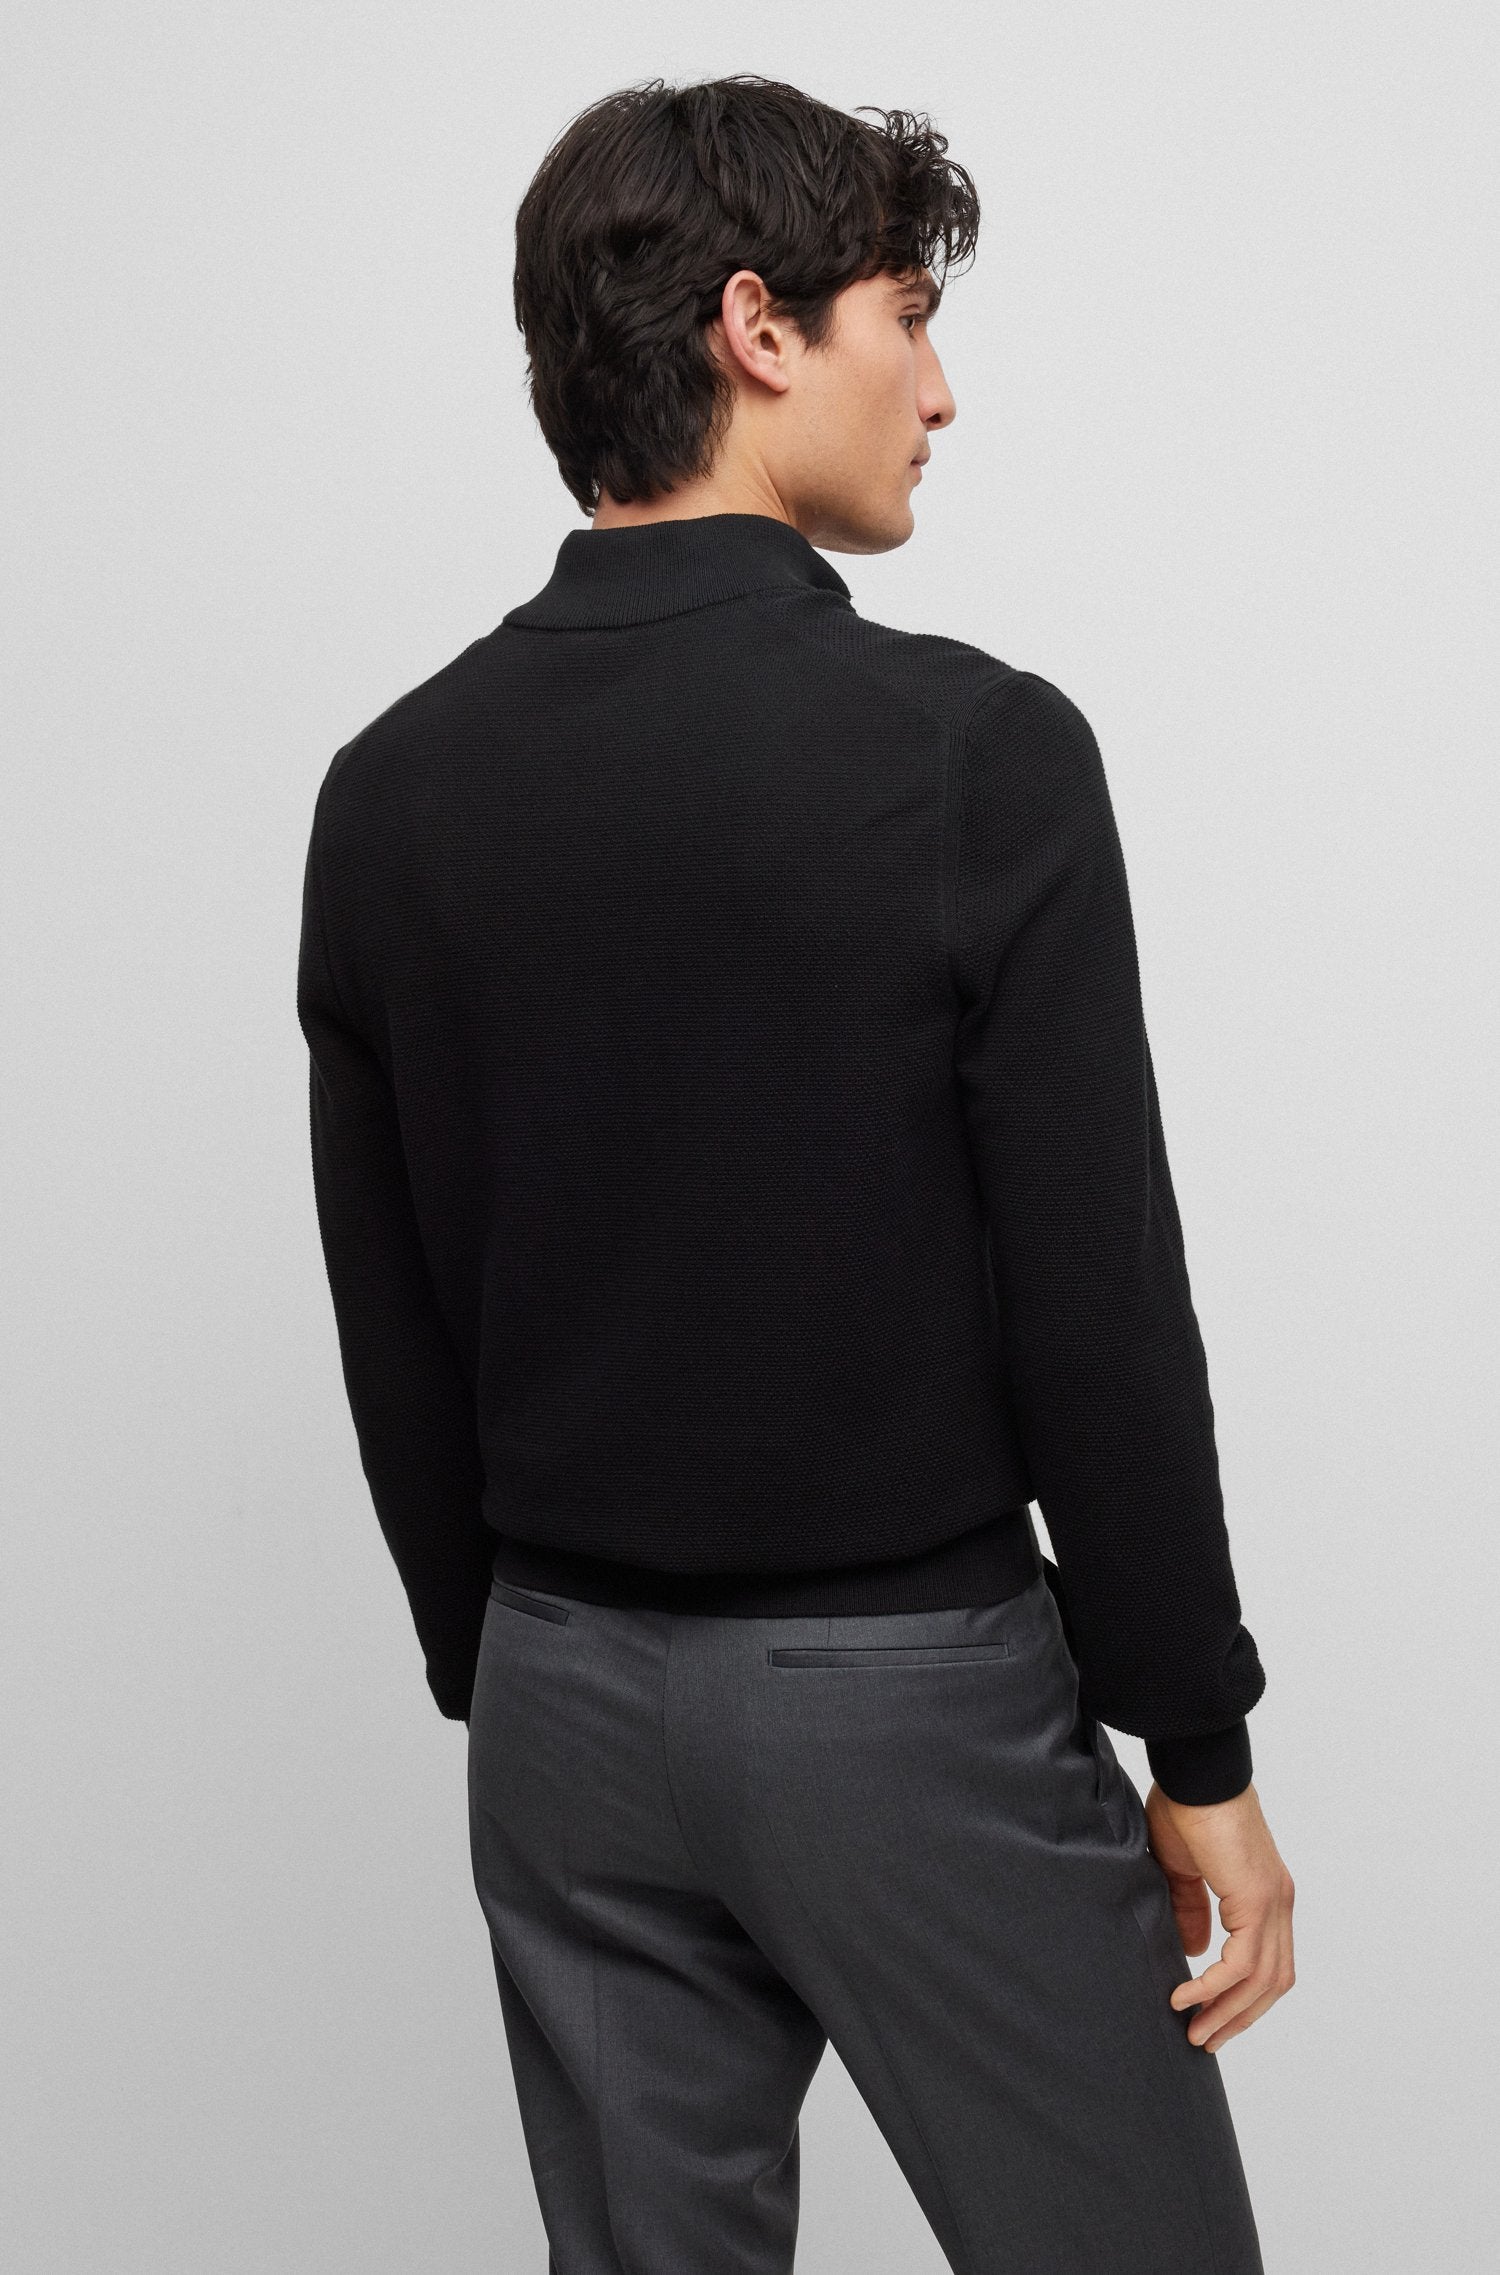 BOSS - EBRANDO Black Textured Cotton Quarter Zip Sweater 50467665 001